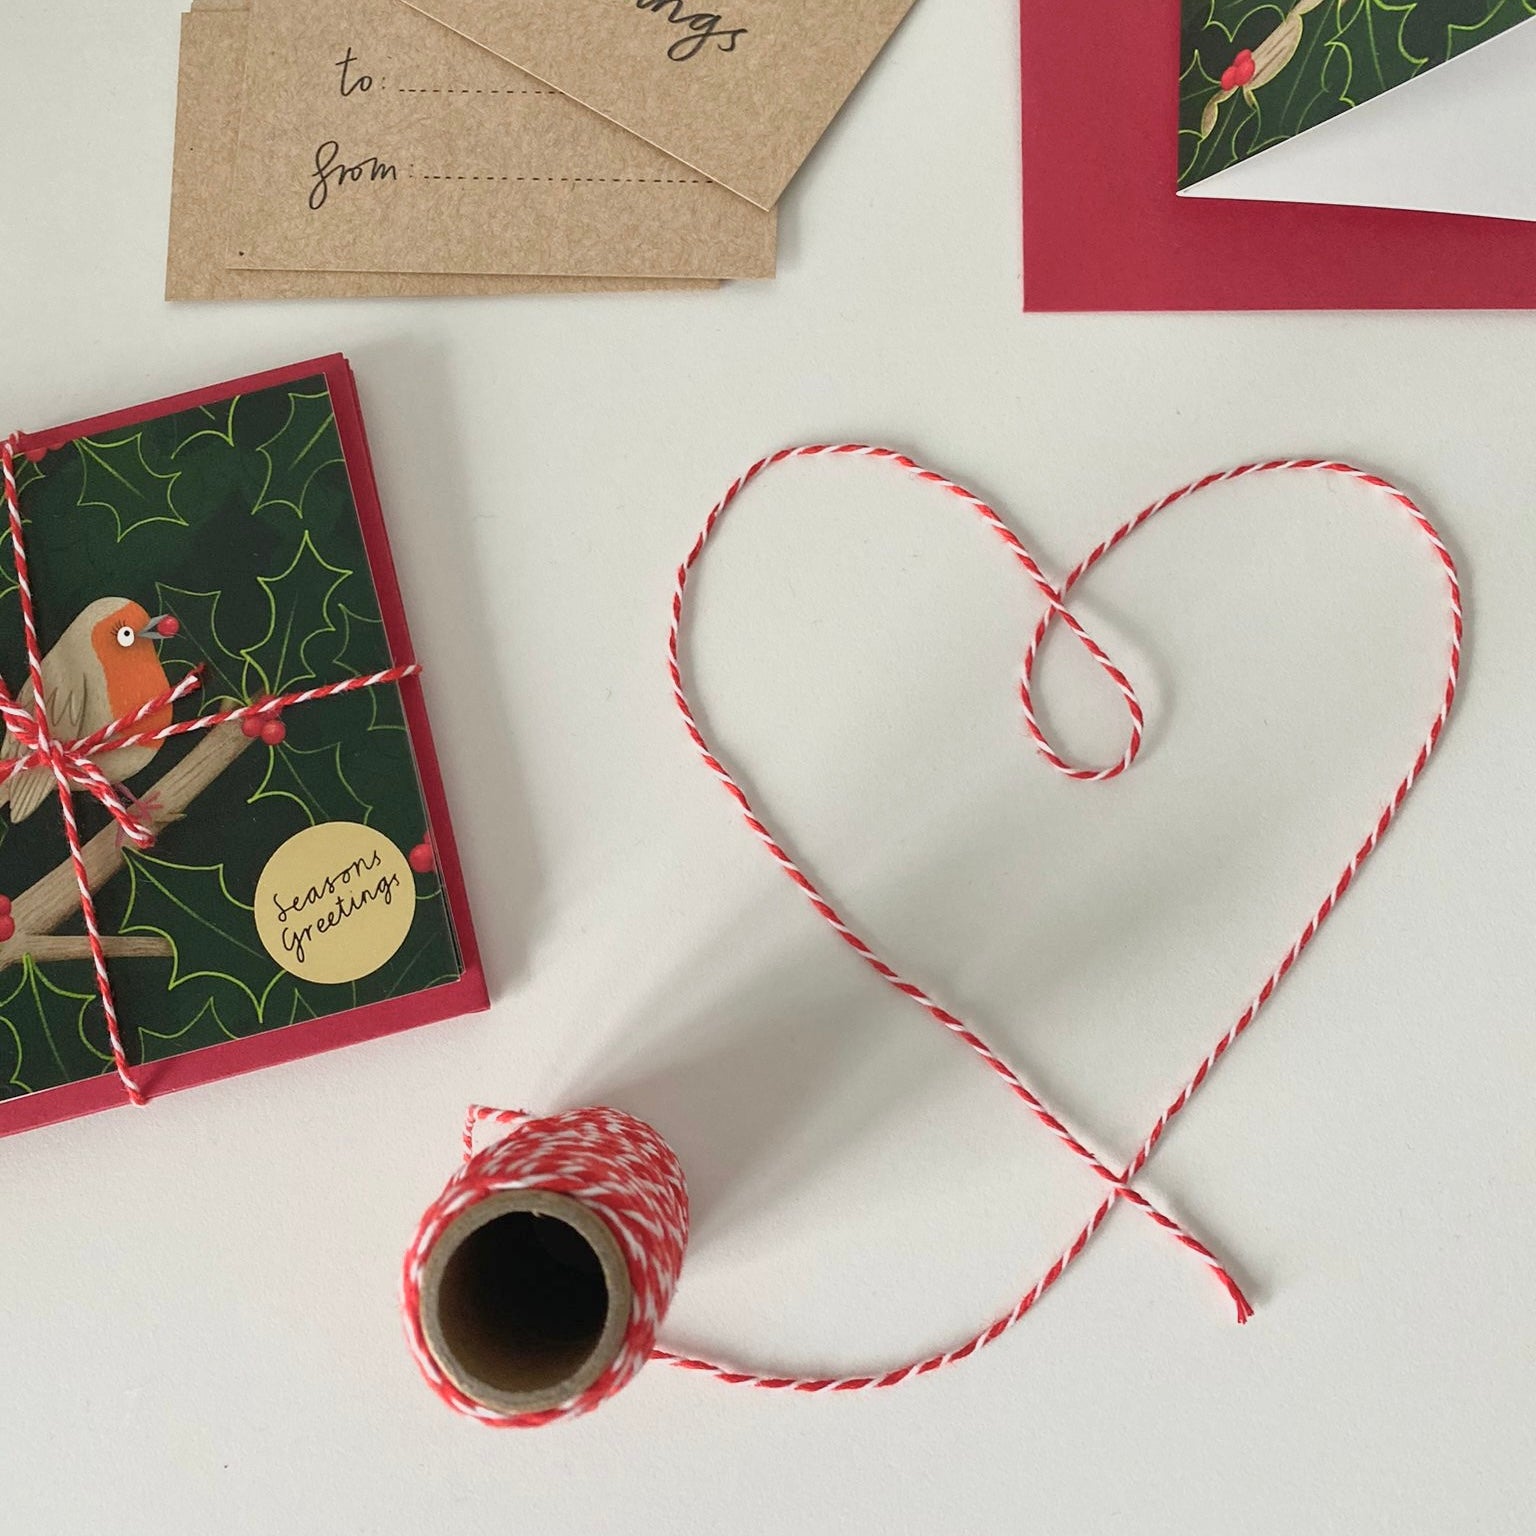 Rebecca Robin Christmas Card - Gold foil Season’s Greetings - 10x10cm card, planet-friendly!